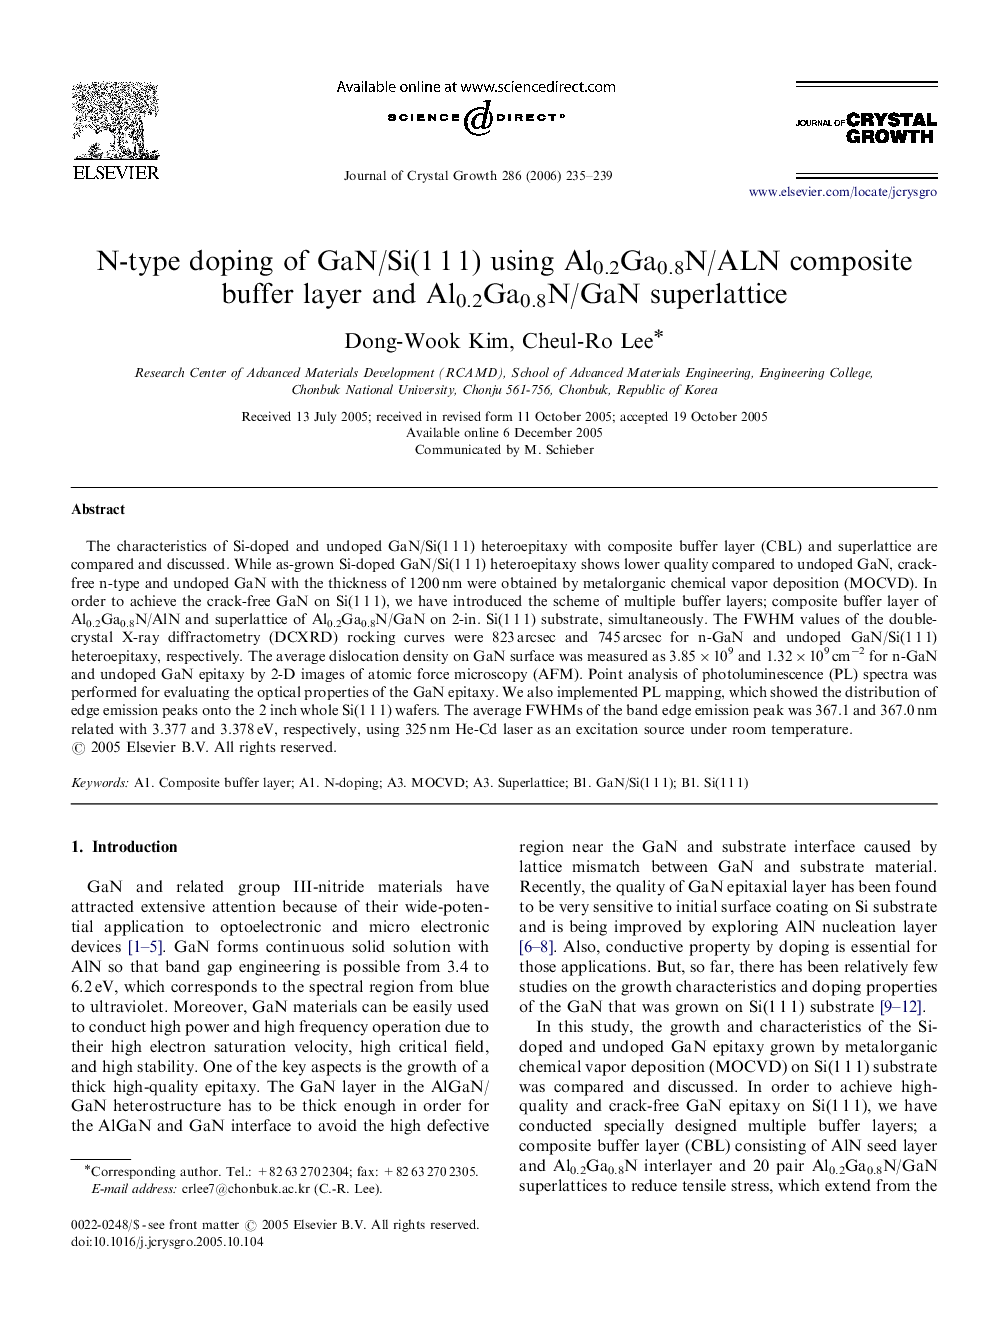 N-type doping of GaN/Si(1 1 1) using Al0.2Ga0.8N/ALN composite buffer layer and Al0.2Ga0.8N/GaN superlattice